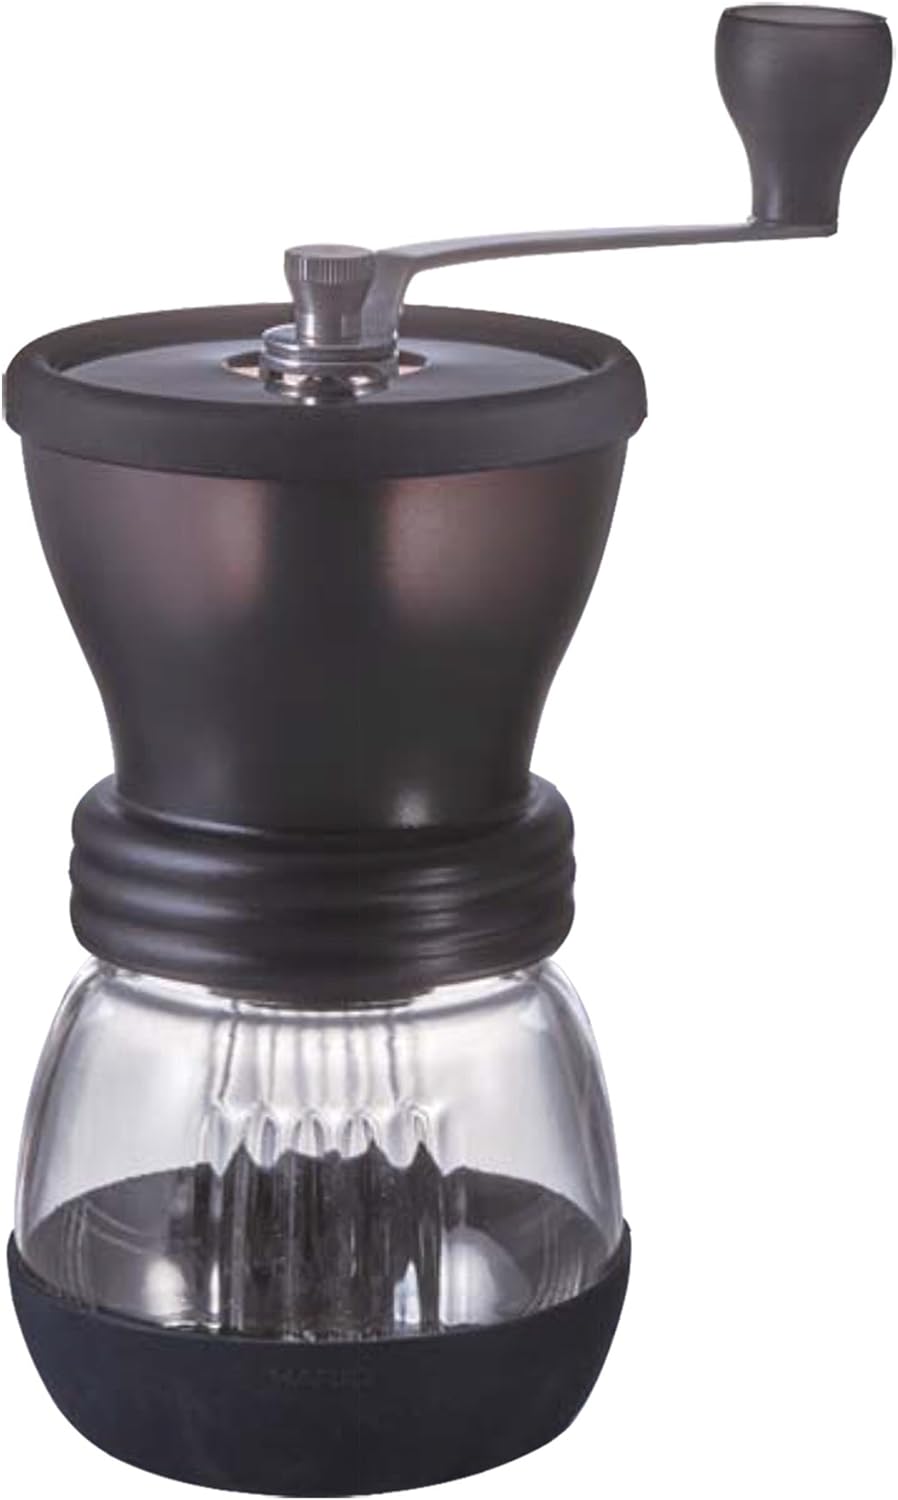 Hario Ceramic Coffee Mill - Skerton Plus Manual Coffee Grinder 100g Coffee Capacity, Black